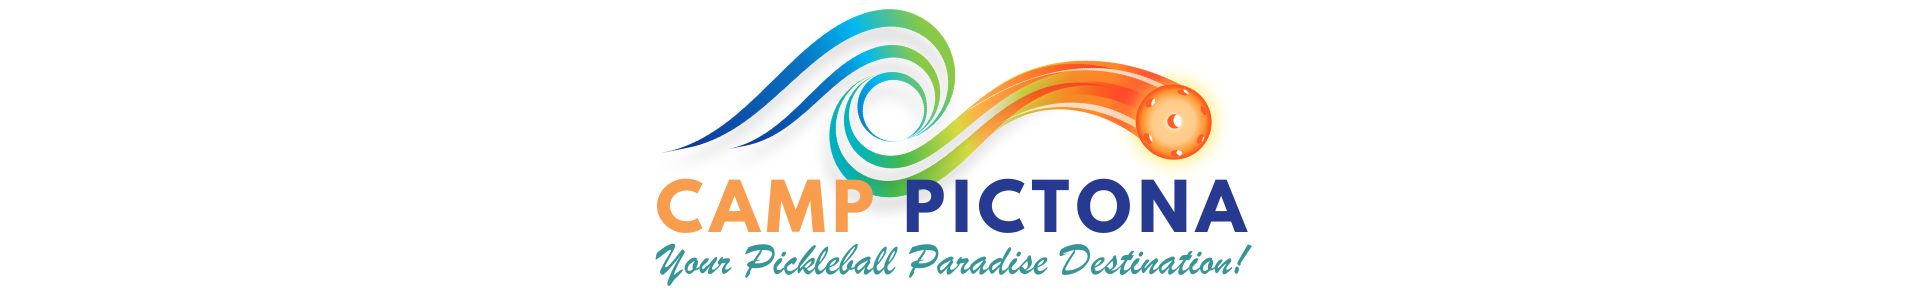 Camp Pictona - Logo